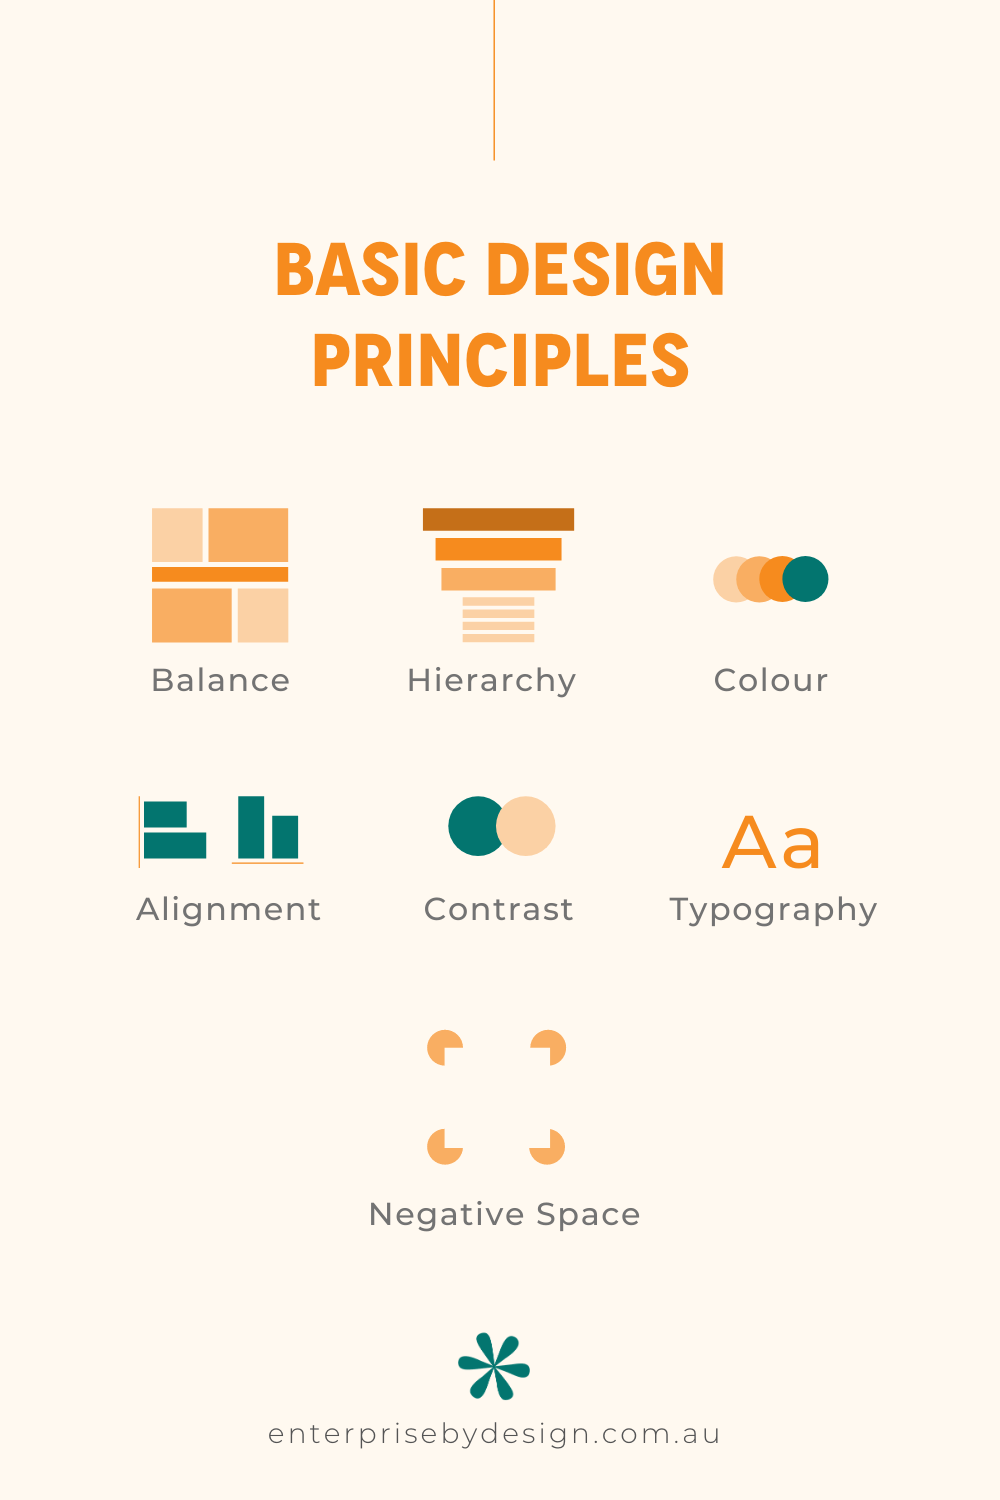 Basic Design Principles